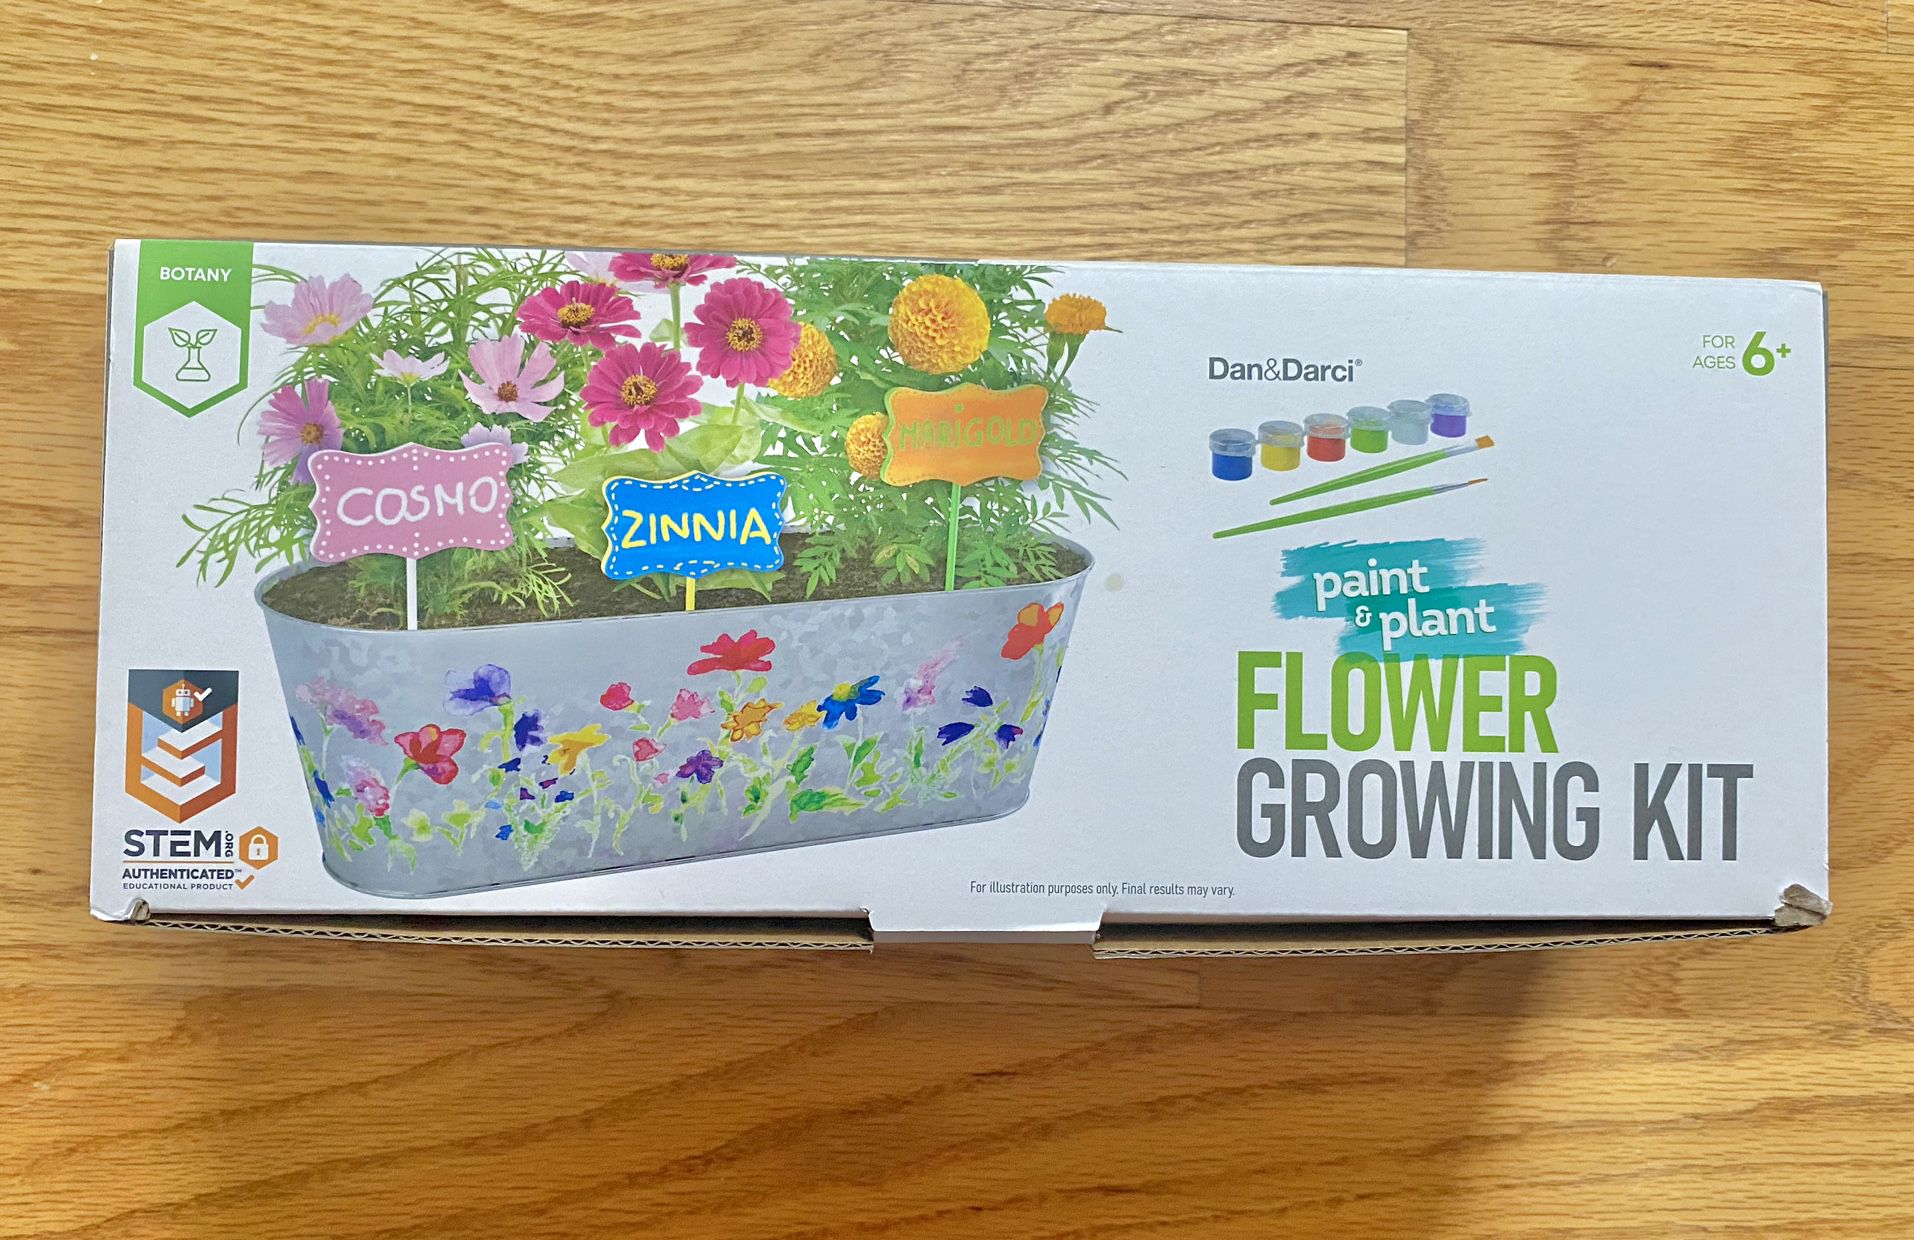 Dan & Darci Paint & Plant Flower Craft Kit for Kids - New